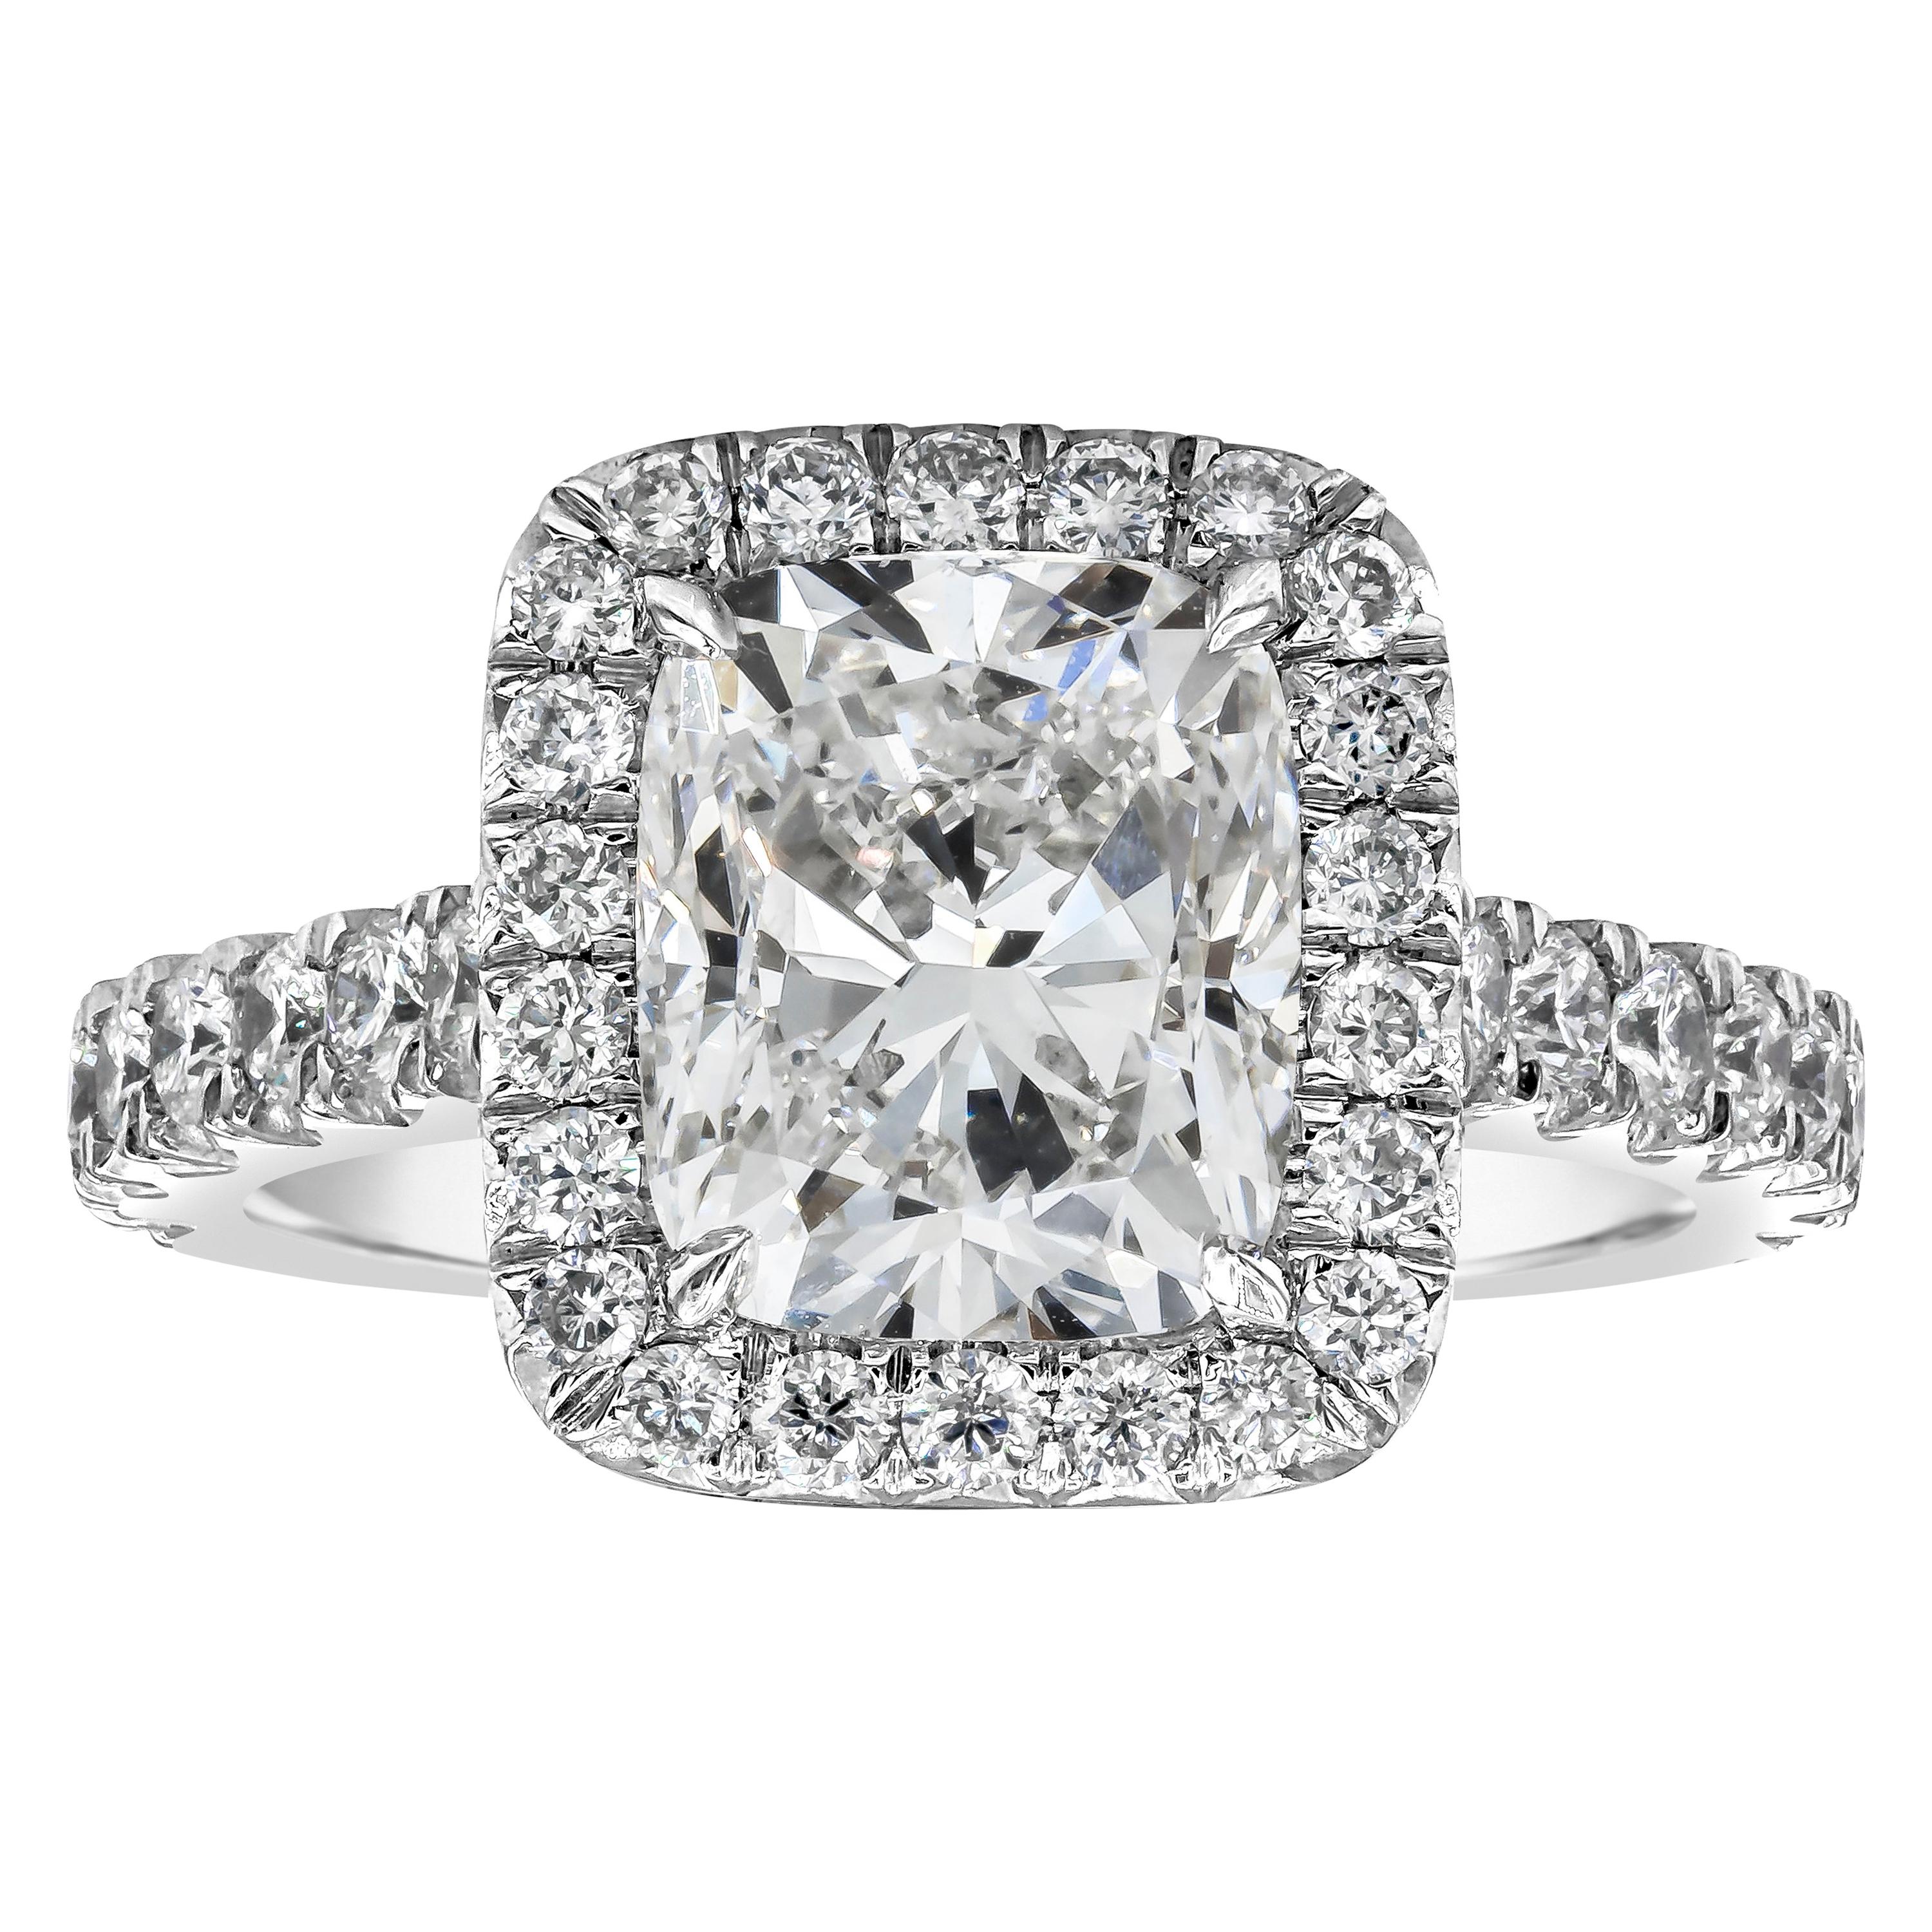 Roman Malakov GIA Certified 3.02 Carats Cushion Cut Diamond Halo Engagement Ring